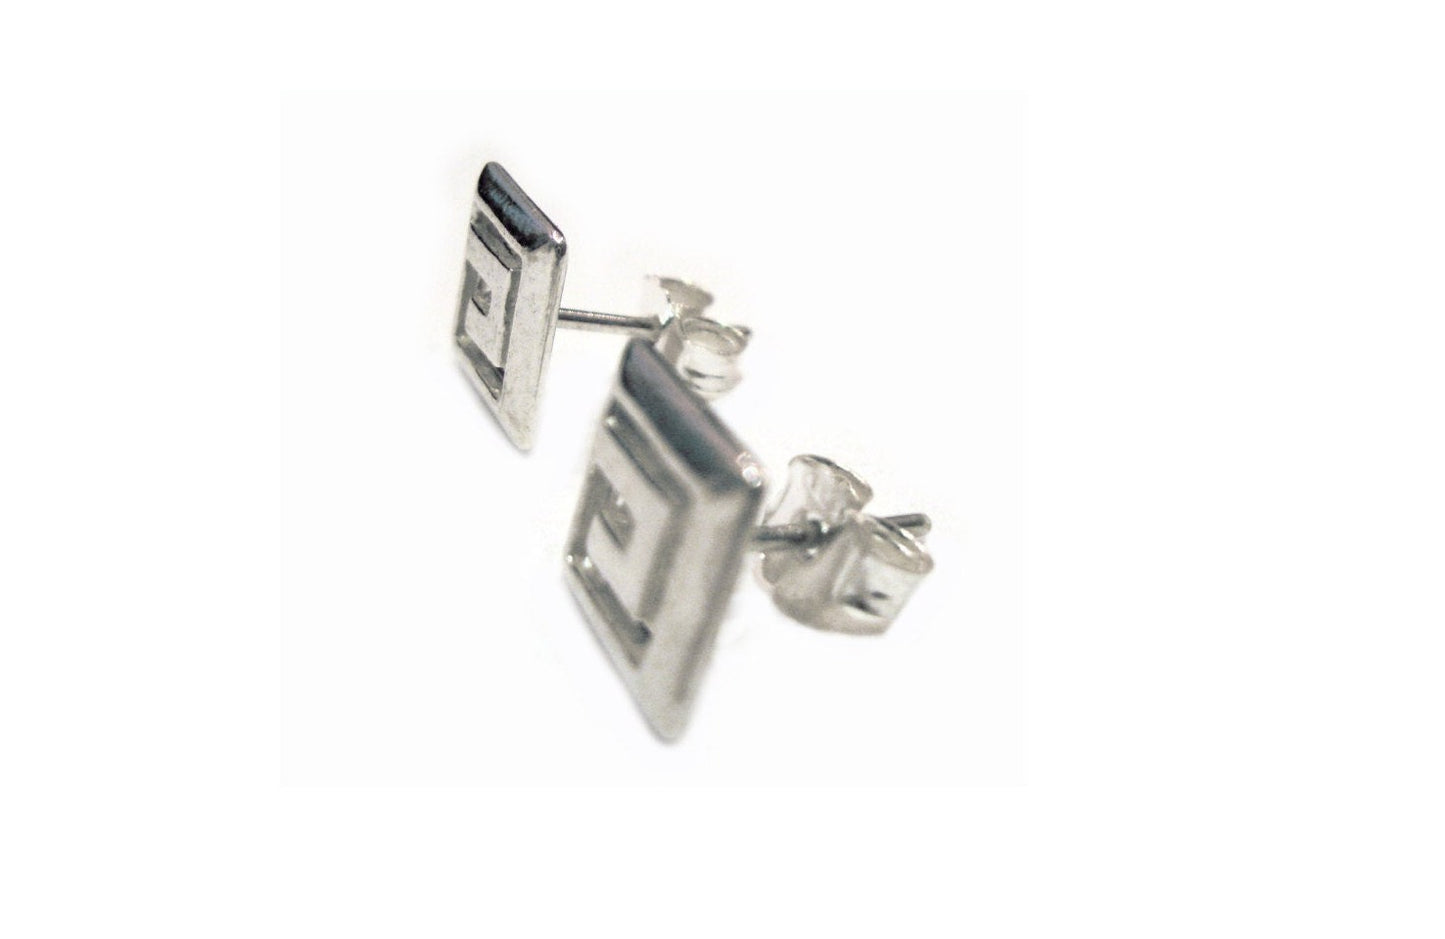 Ancient Greek Eternity Key Meander Square Studs Earrings Sterling Silver 925, Griechische Silber Ohrringe, Boucles d'oreilles Grecque Argent